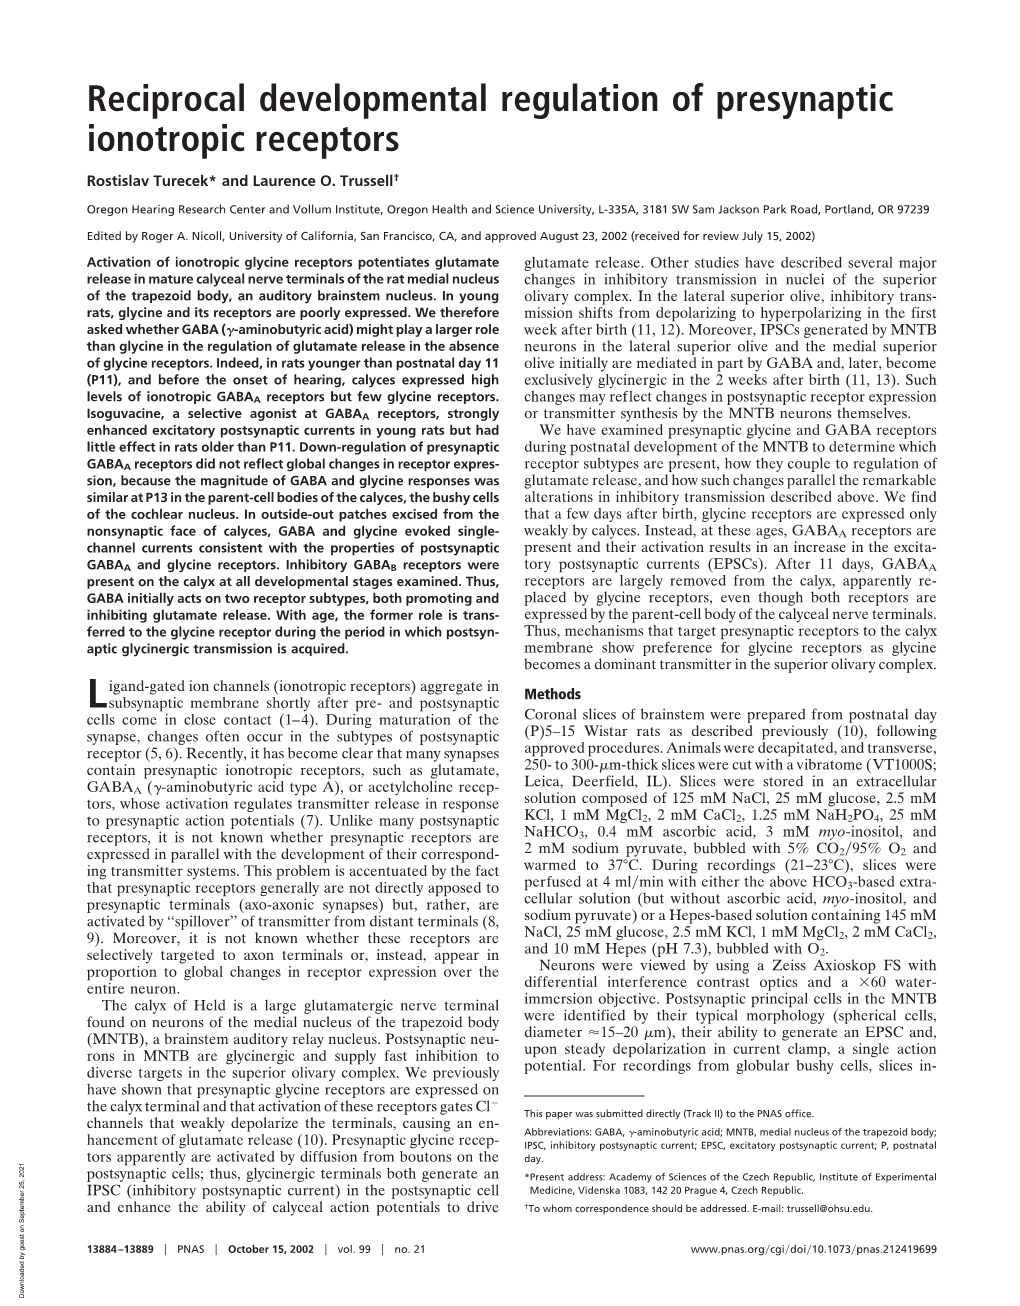 Reciprocal Developmental Regulation of Presynaptic Ionotropic Receptors